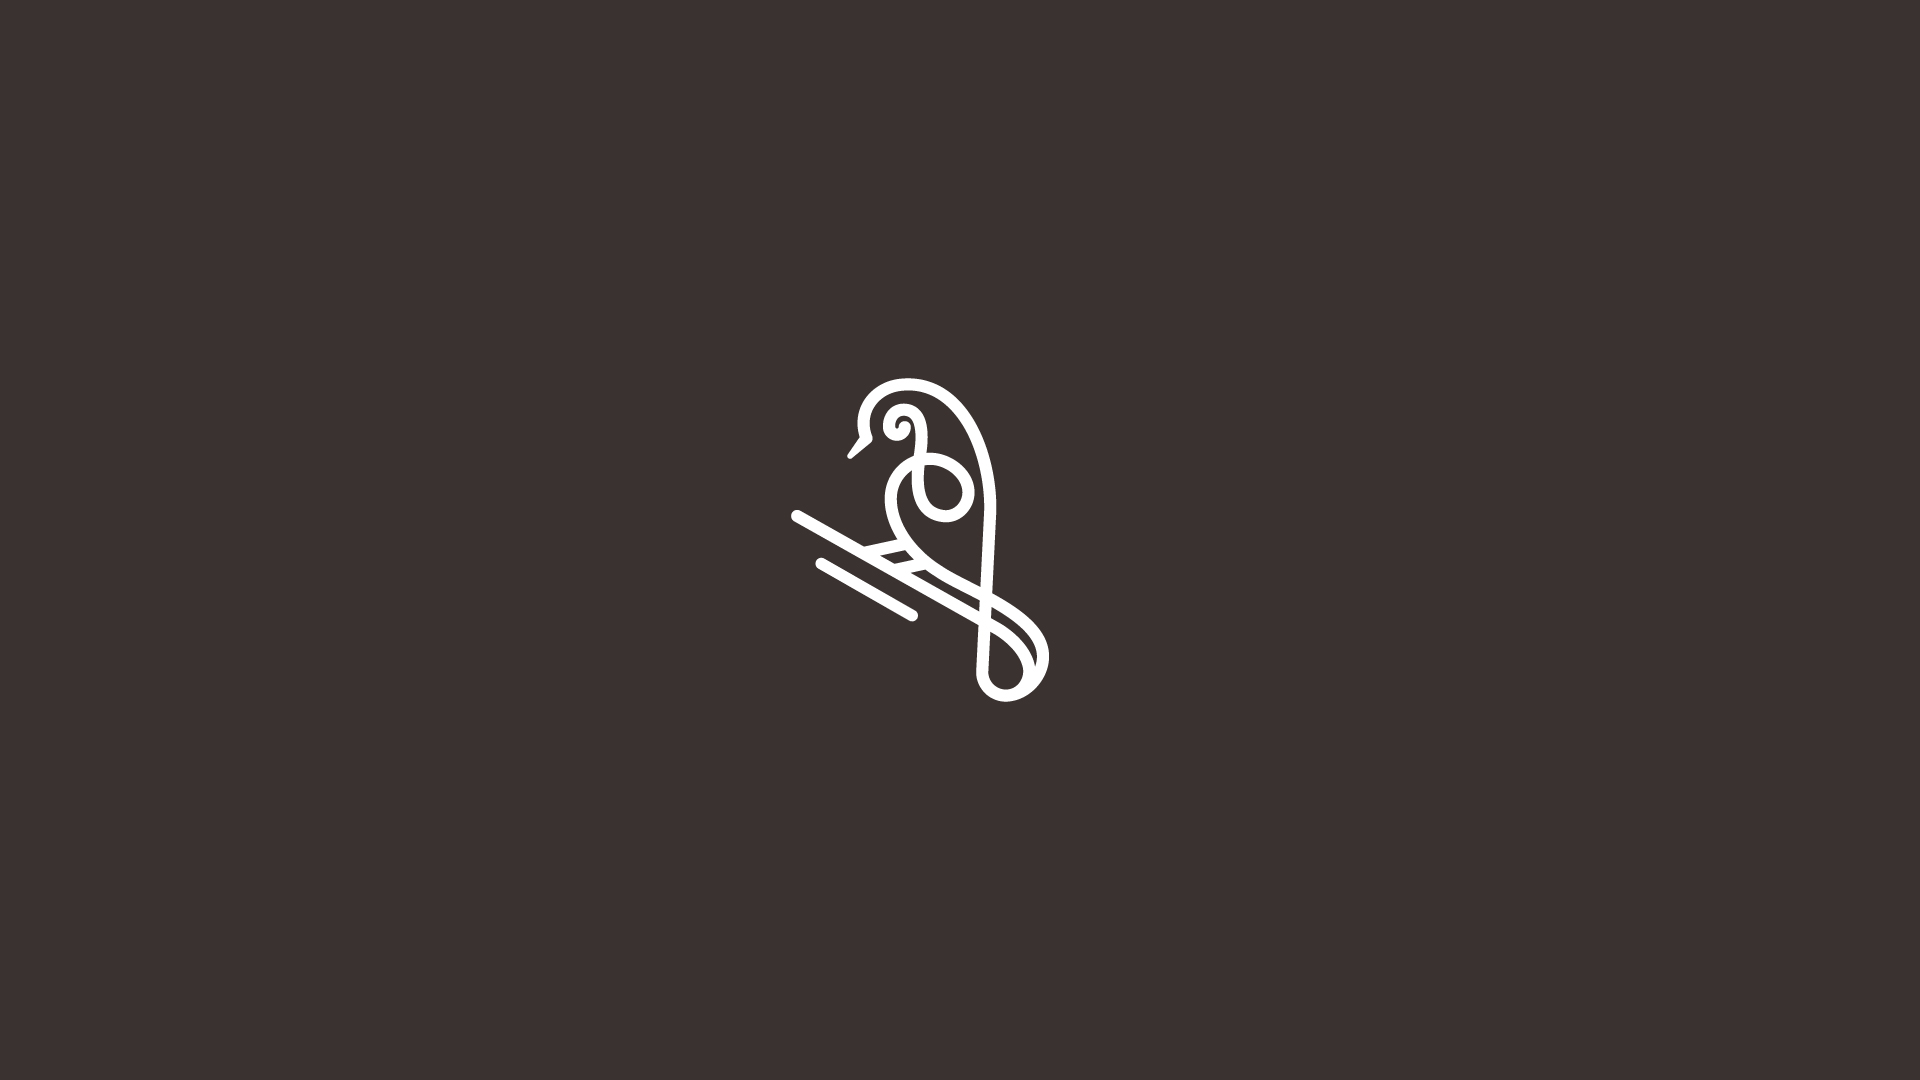 Animal logo - Bird and music symbol